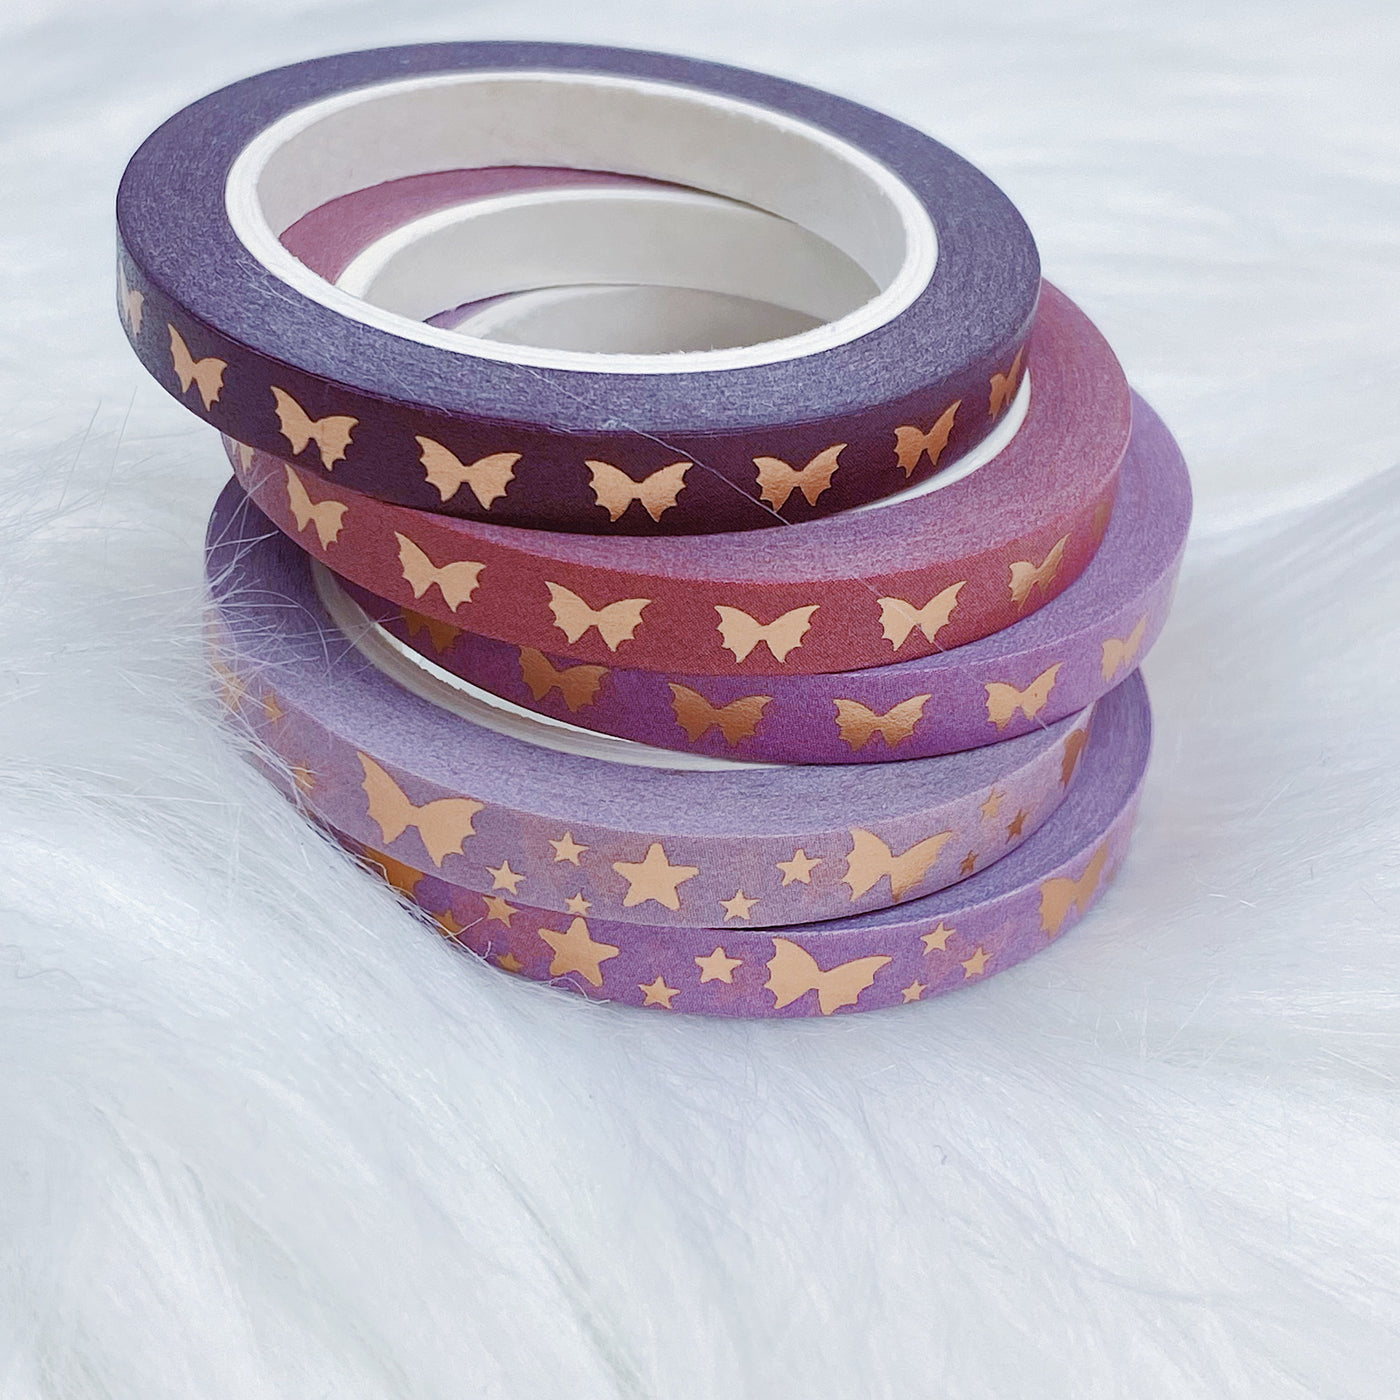 Send Me Nudes Rose Gold Baby Bat Bows Perforated Header Washi Bundle | (5) 5MM Tapes